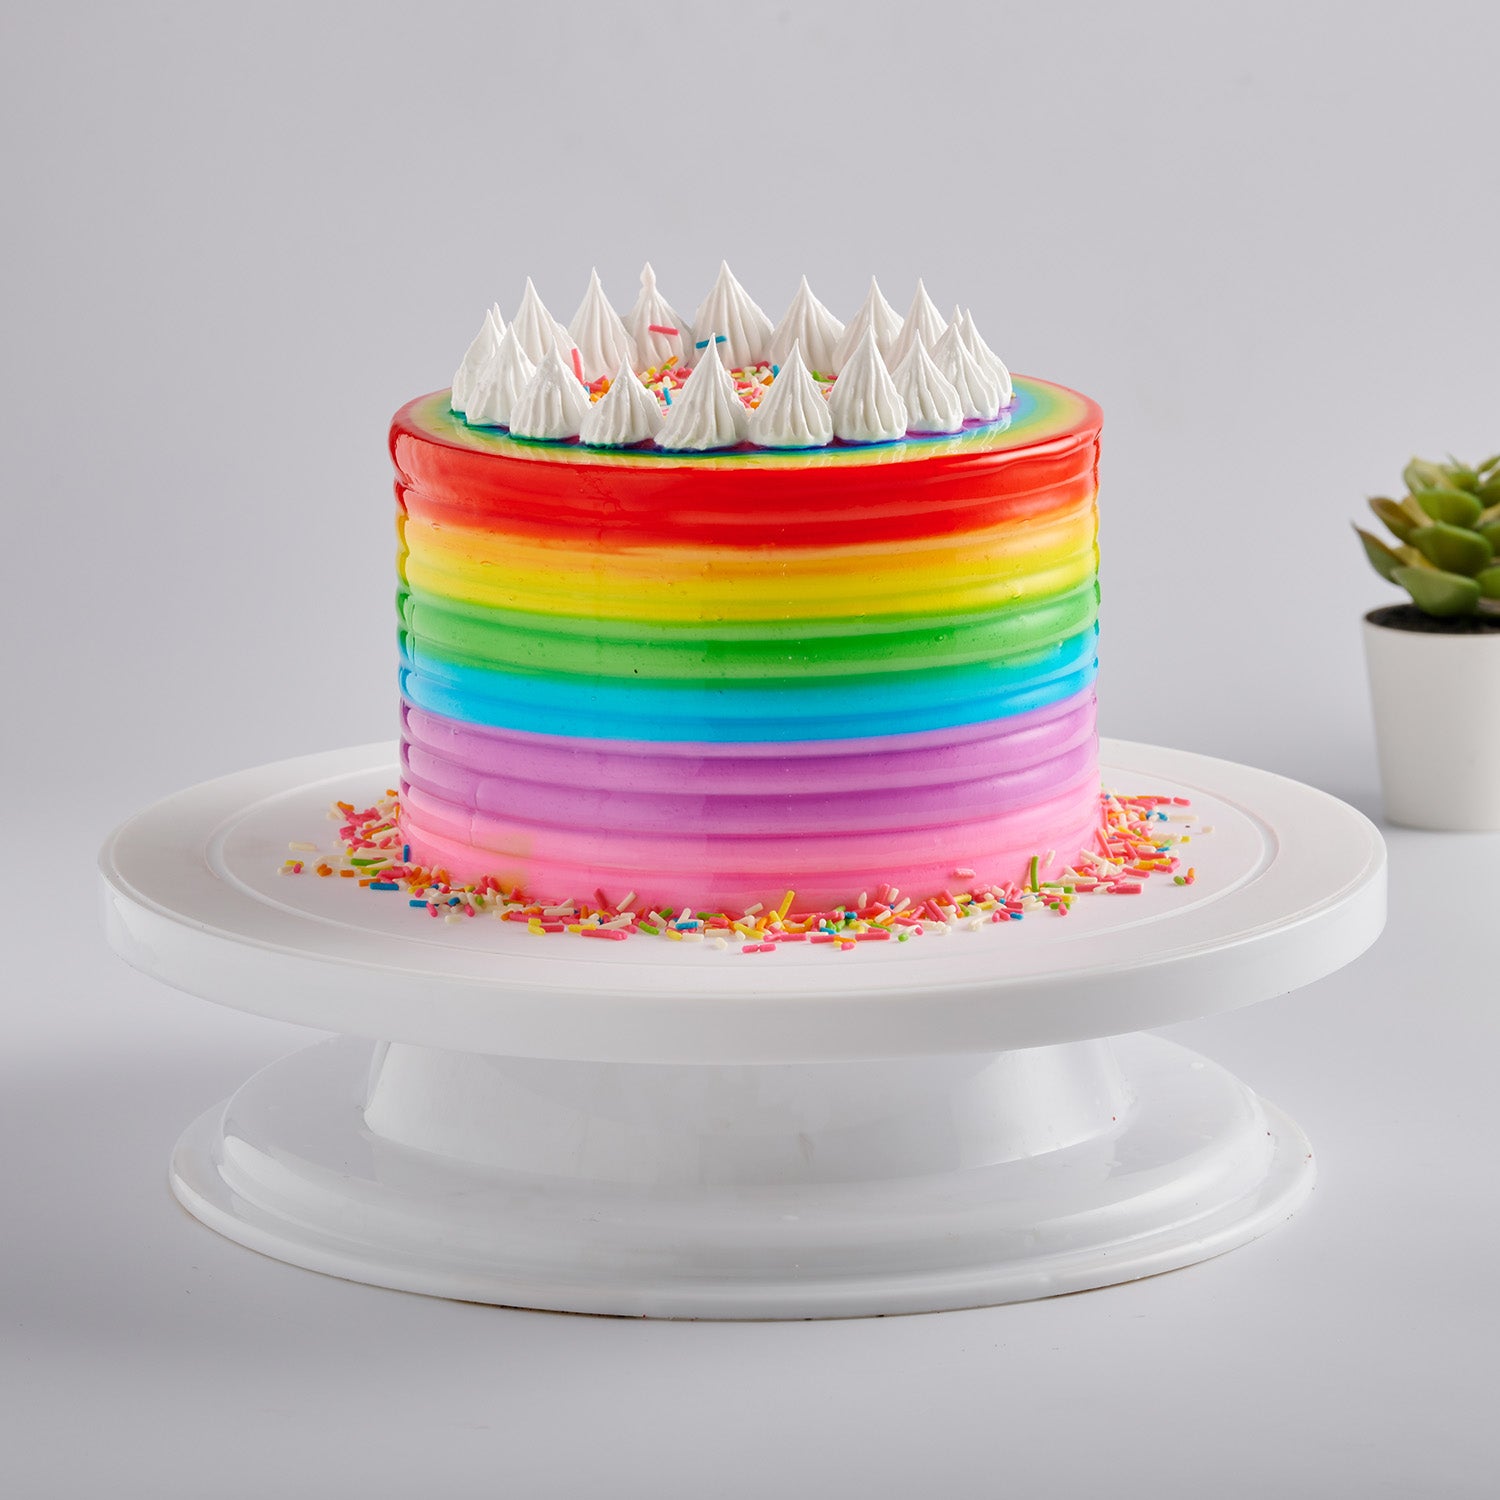 Rainbow Cake - My Kids Lick The Bowl